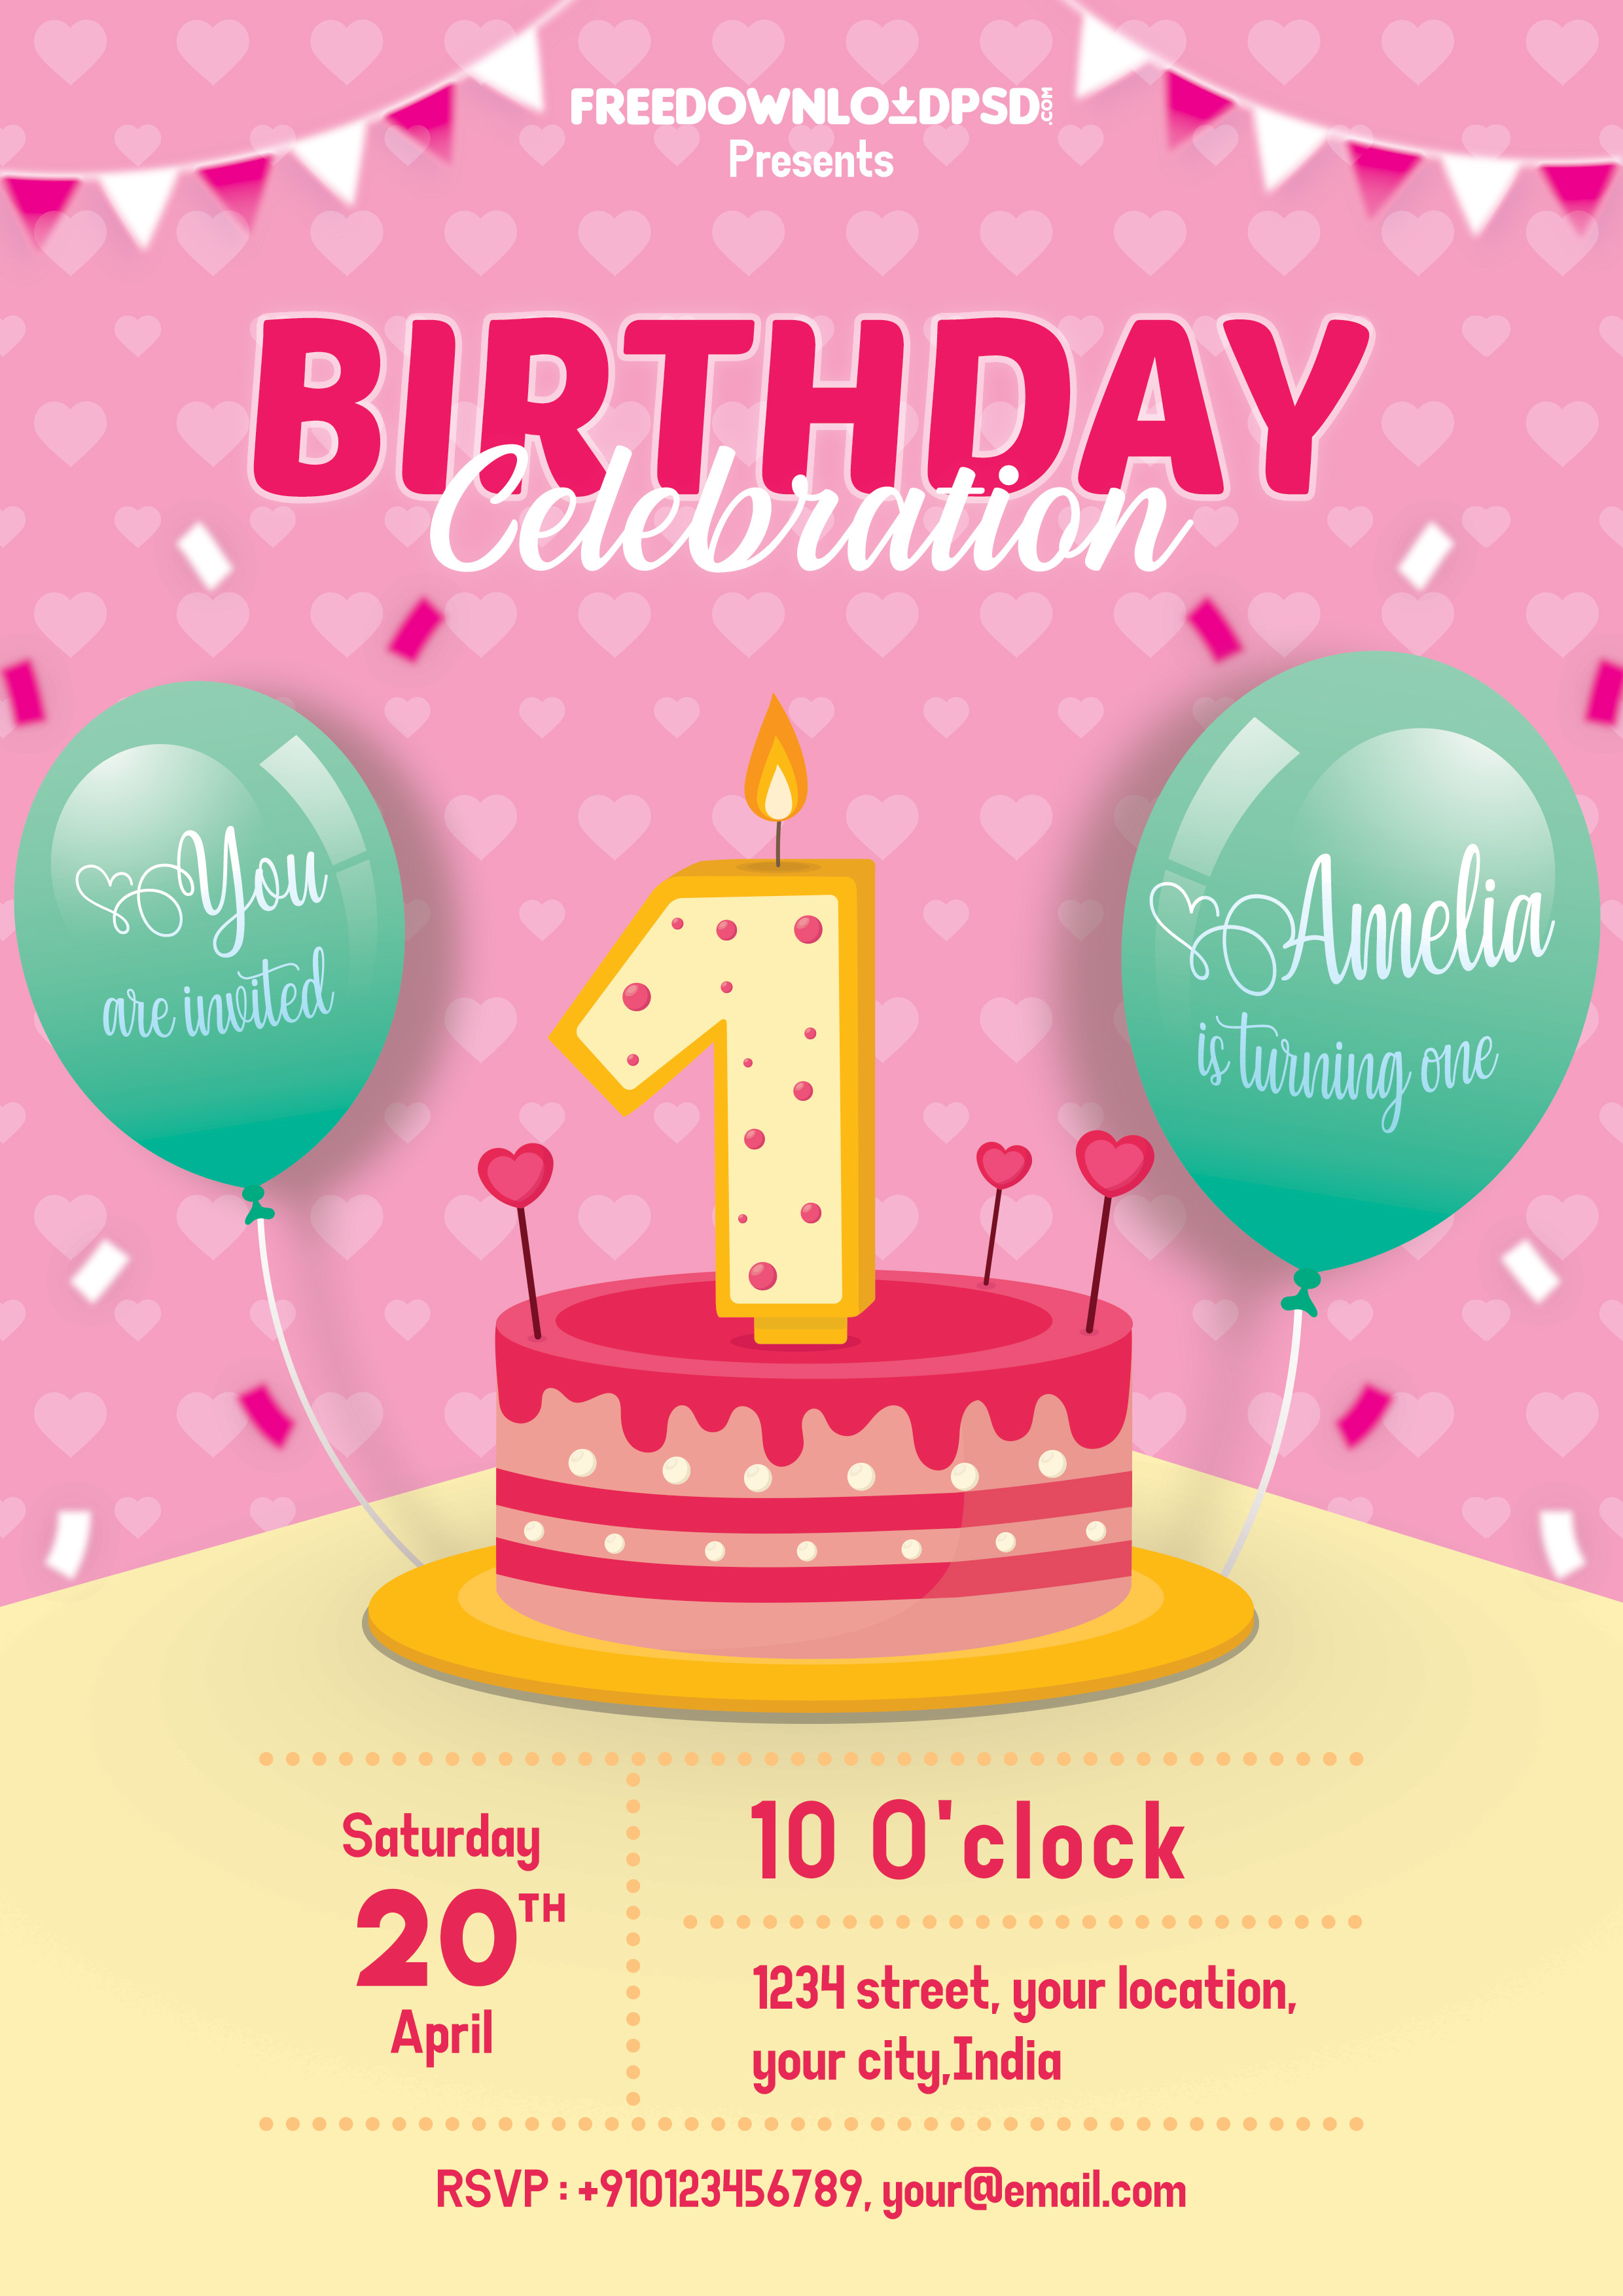 birthday-party-invitation-freedownloadpsd